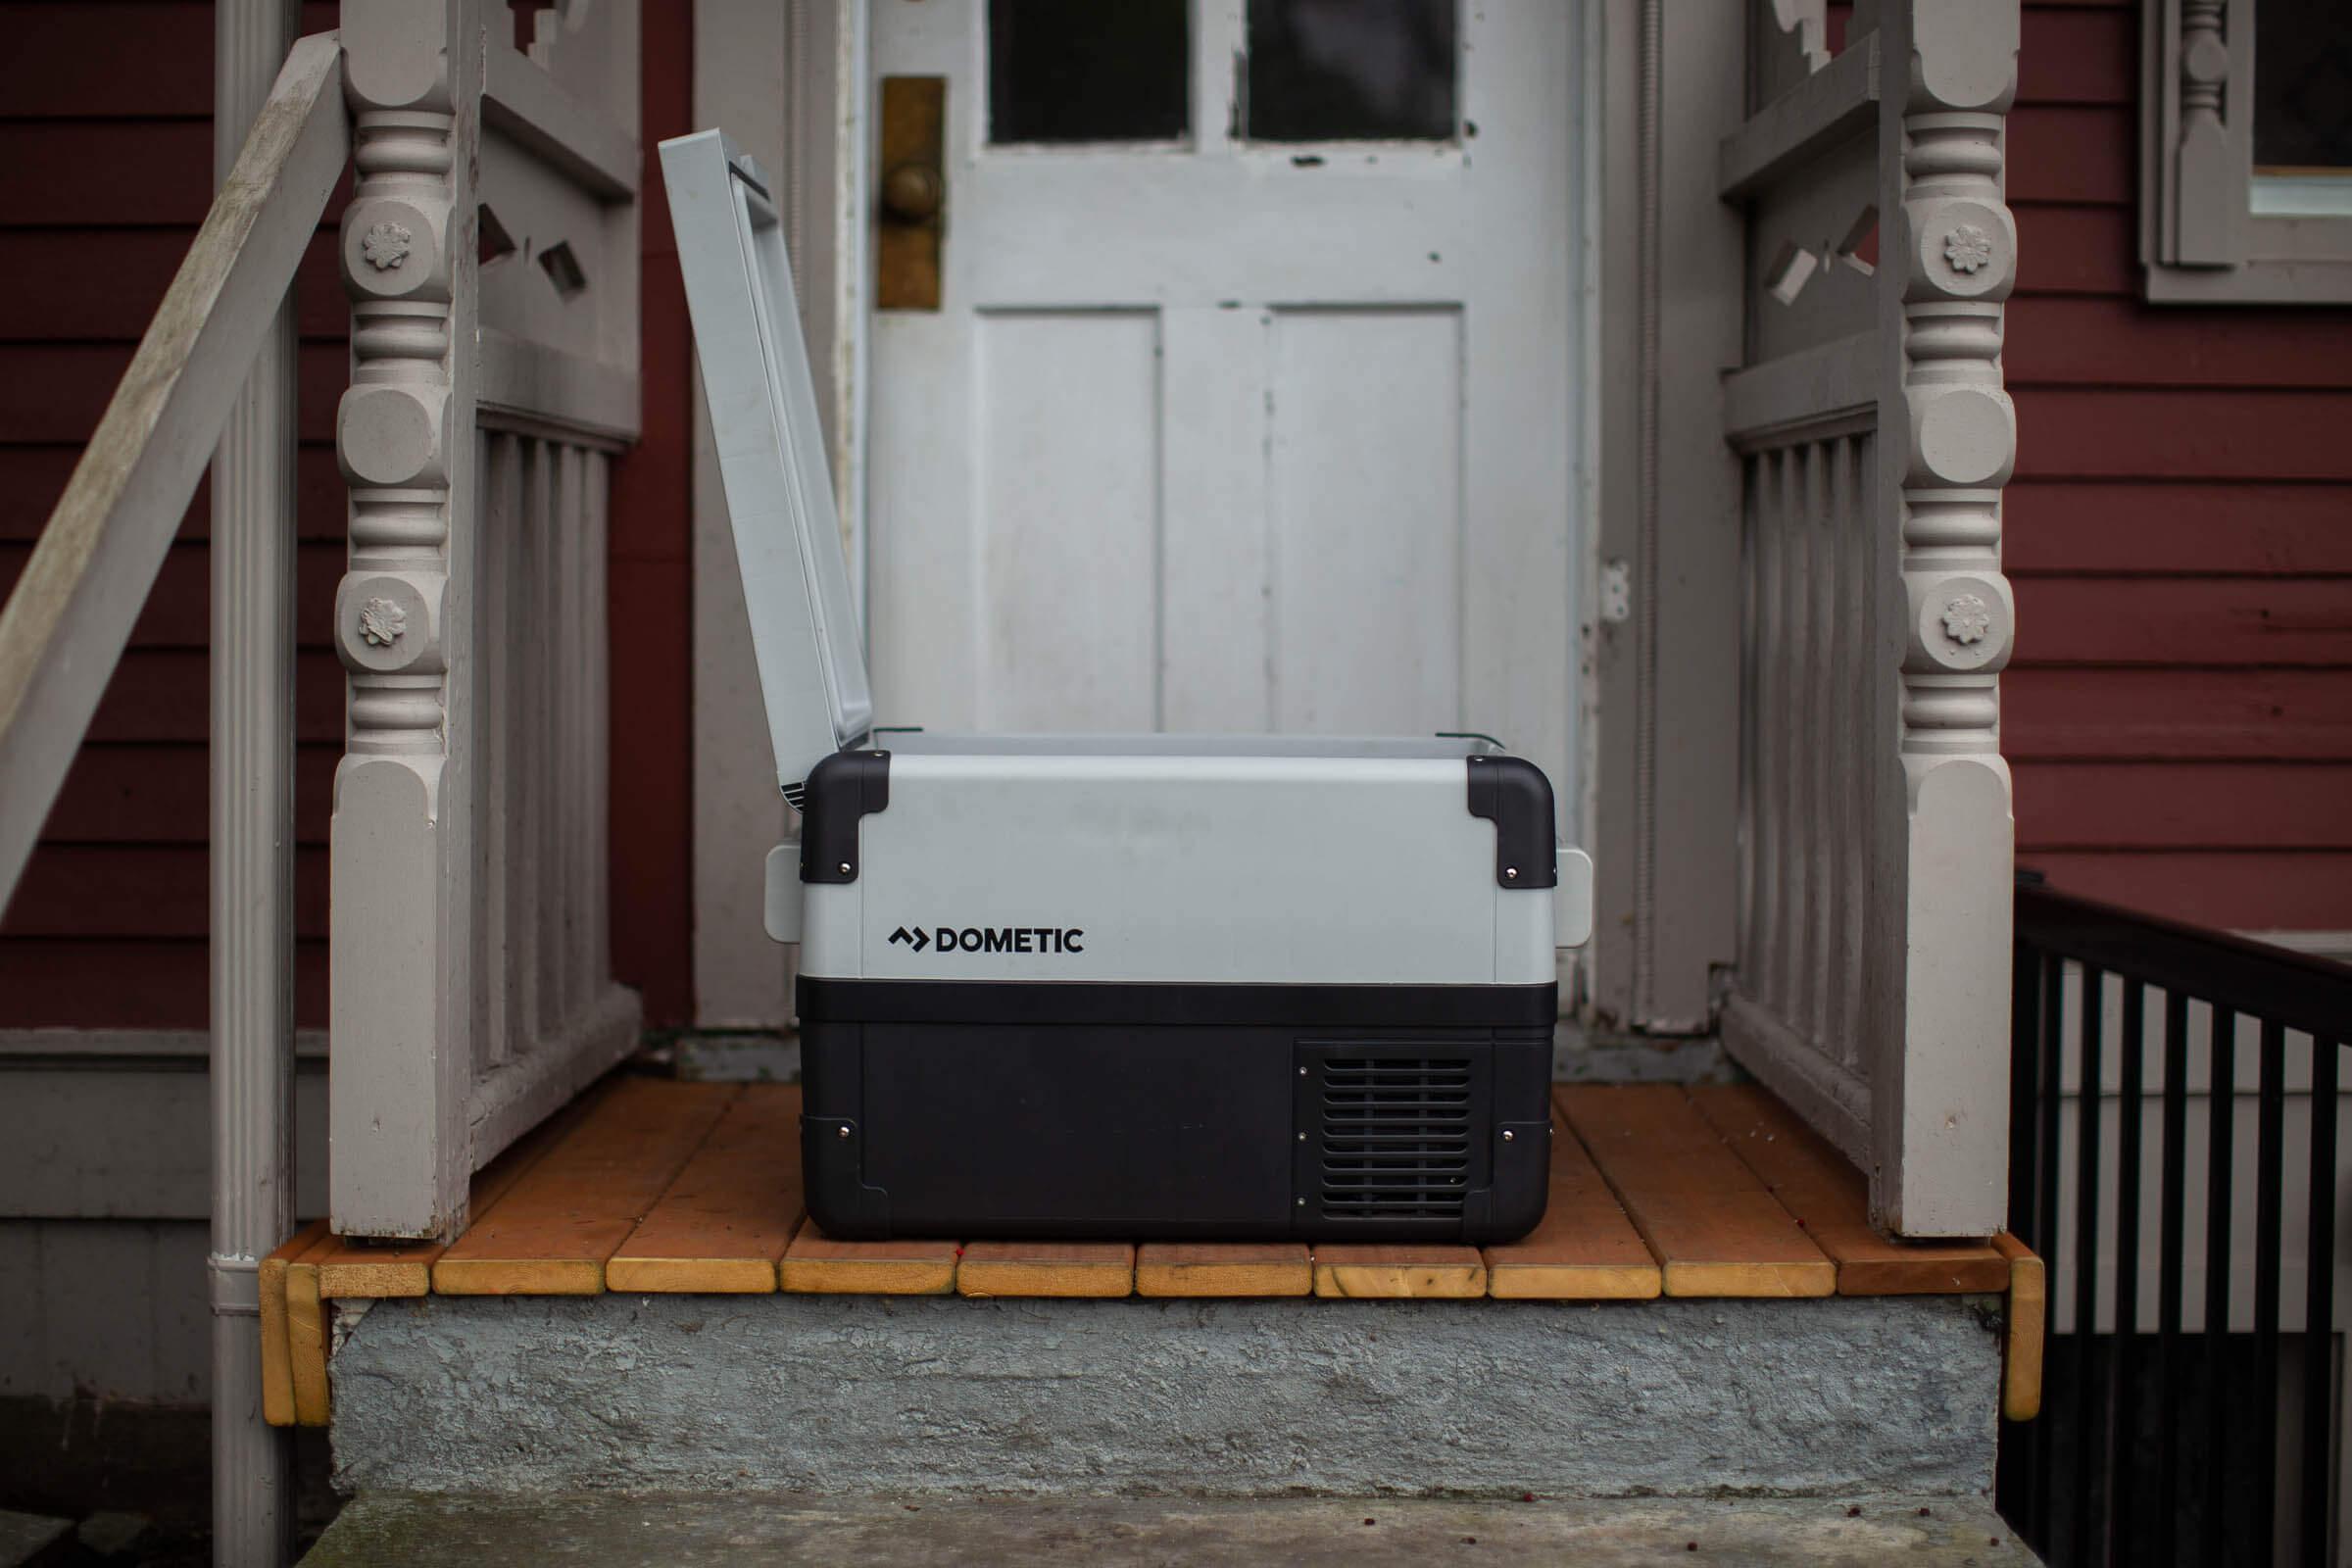 DIY Refrigerator Slide For Portable Refrigerator Freezers Like Dometic For  Your RV Camper Or Van 